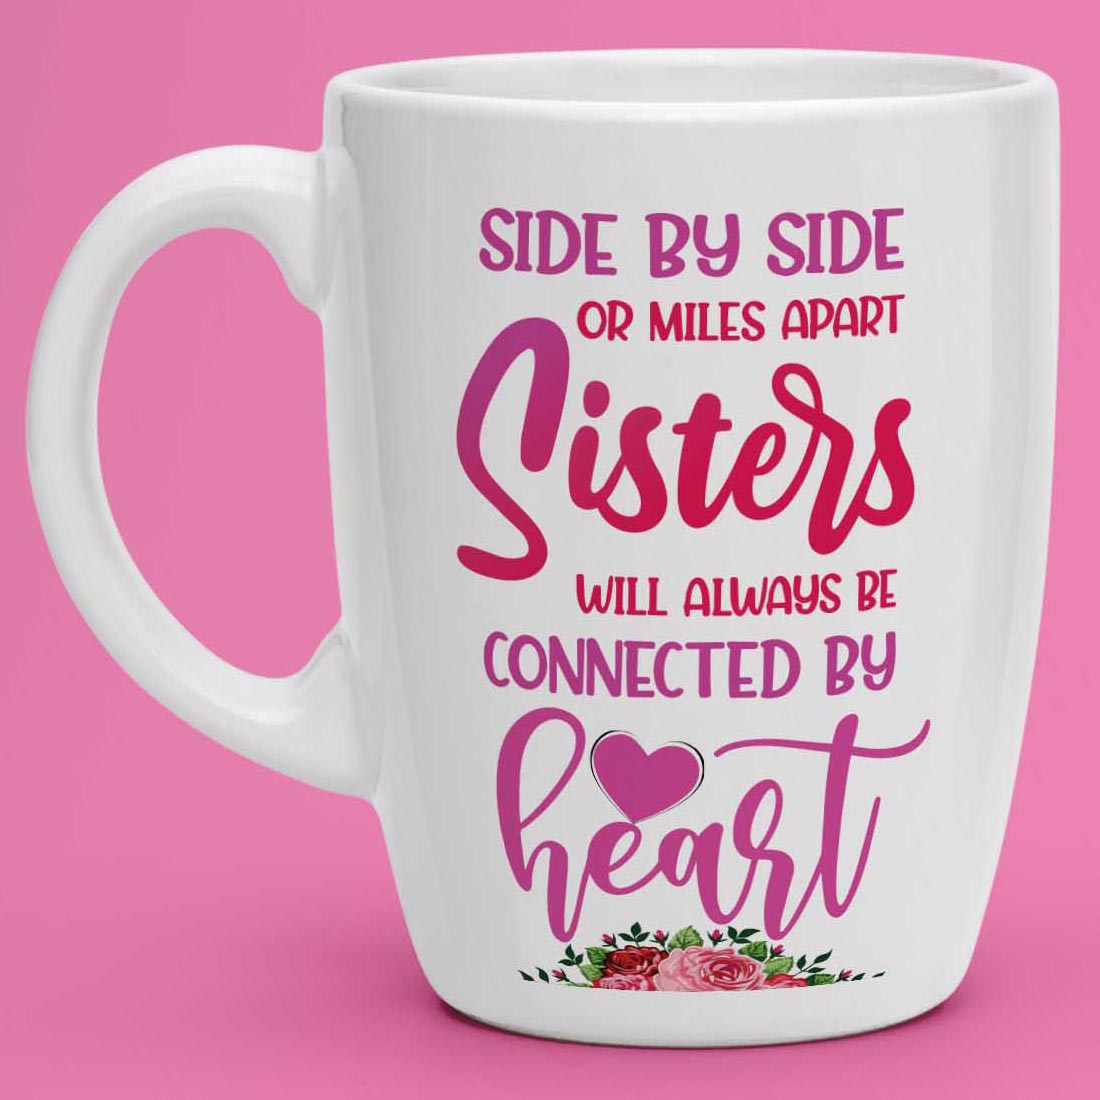 Mug Designs Sister Love cover image.